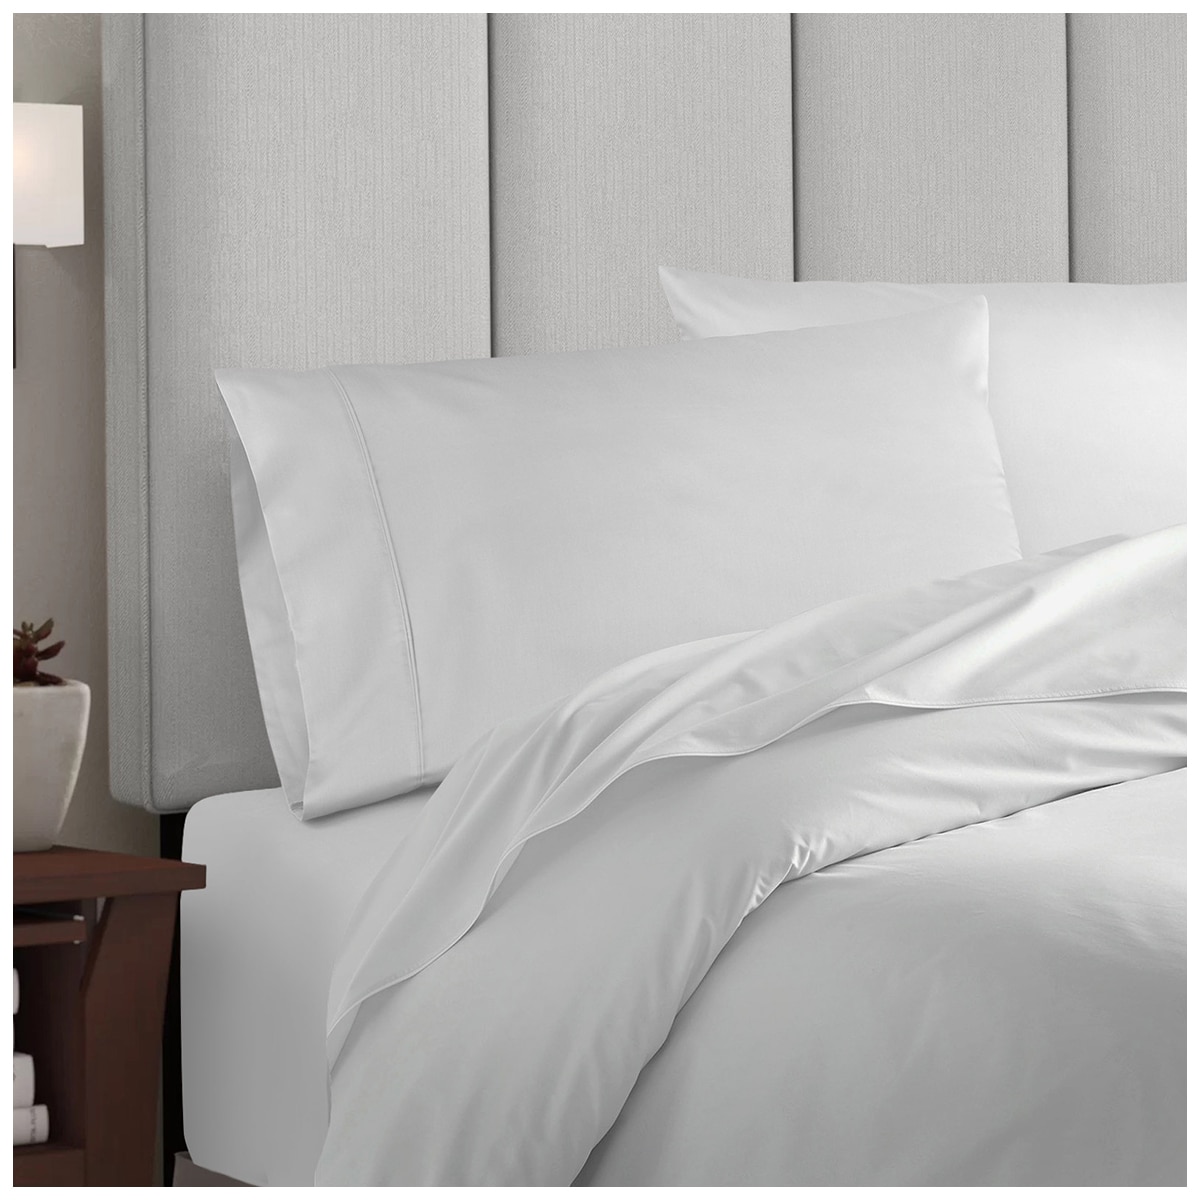 Bdirect Royal Comfort - Balmain 1000TC Bamboo cotton Quilt Cover Sets (King) - White